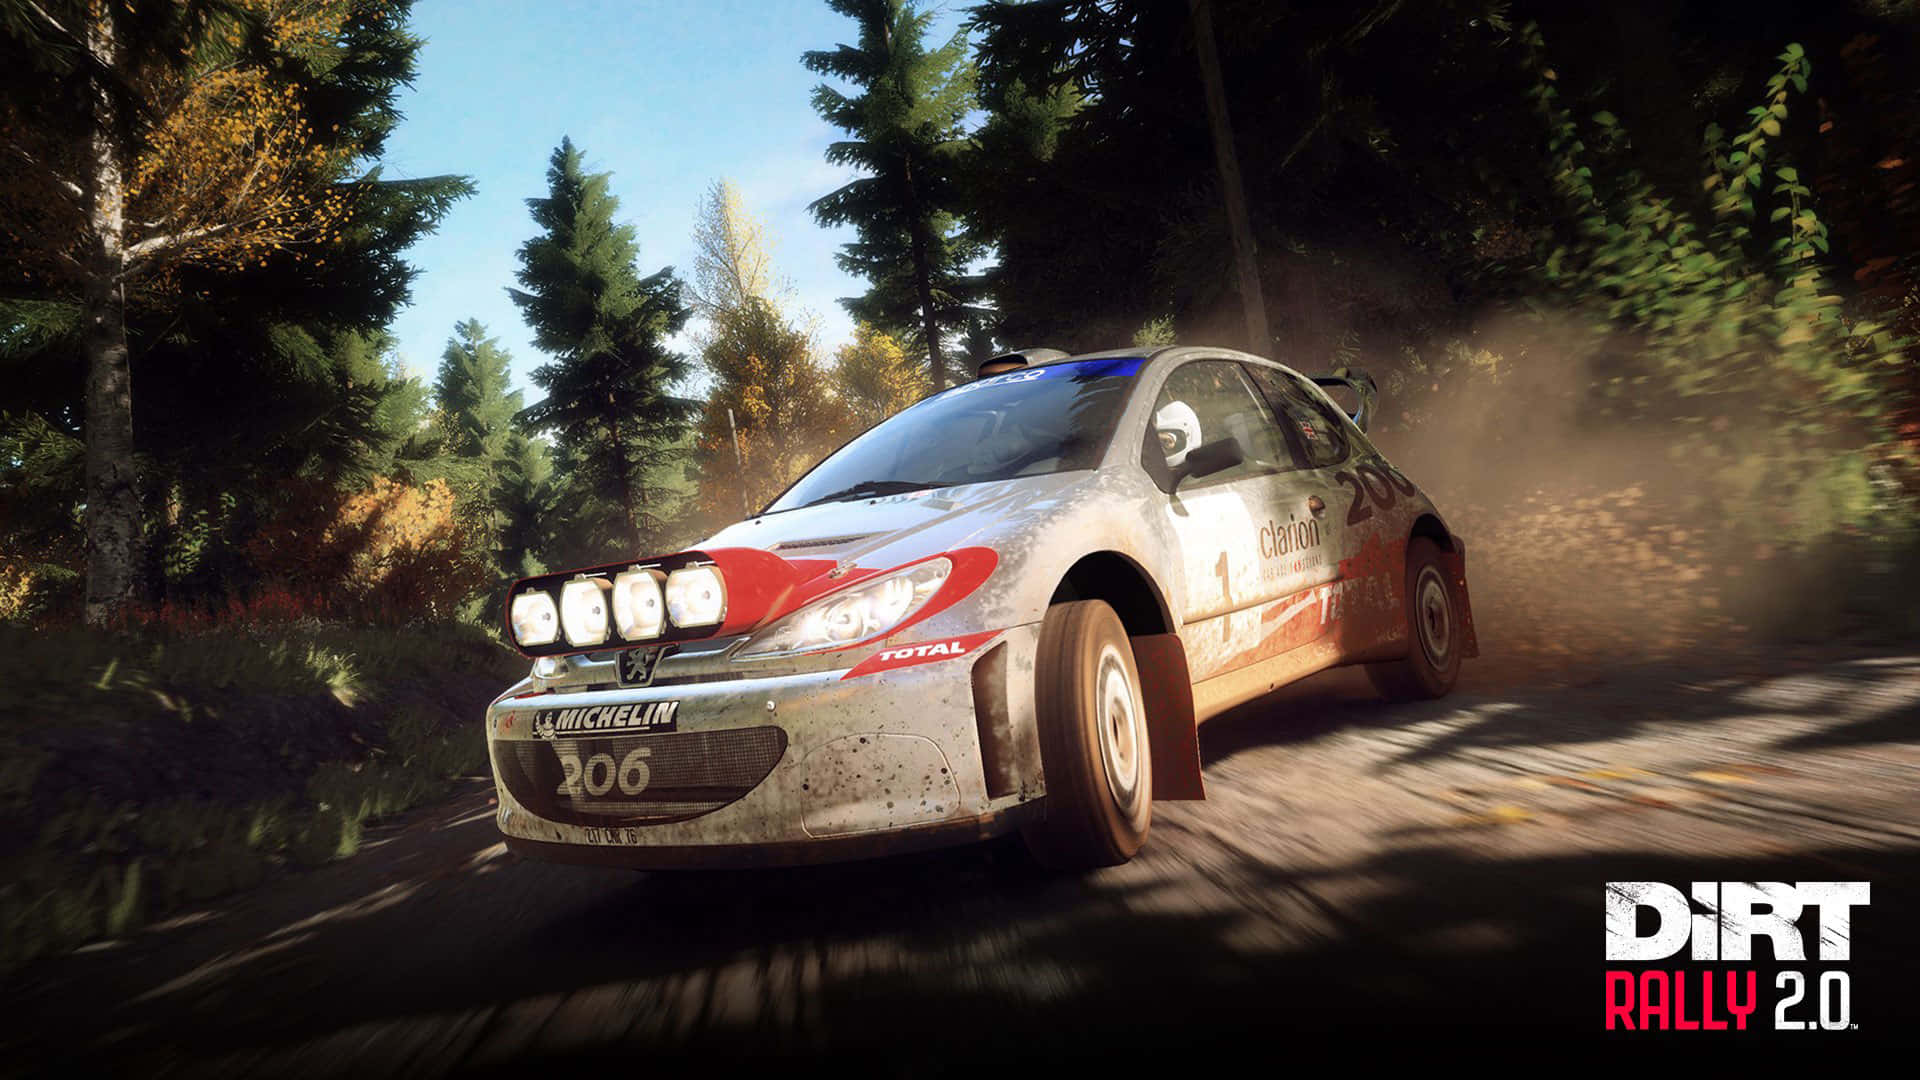 Feel the Rush of Professional Rally Racing